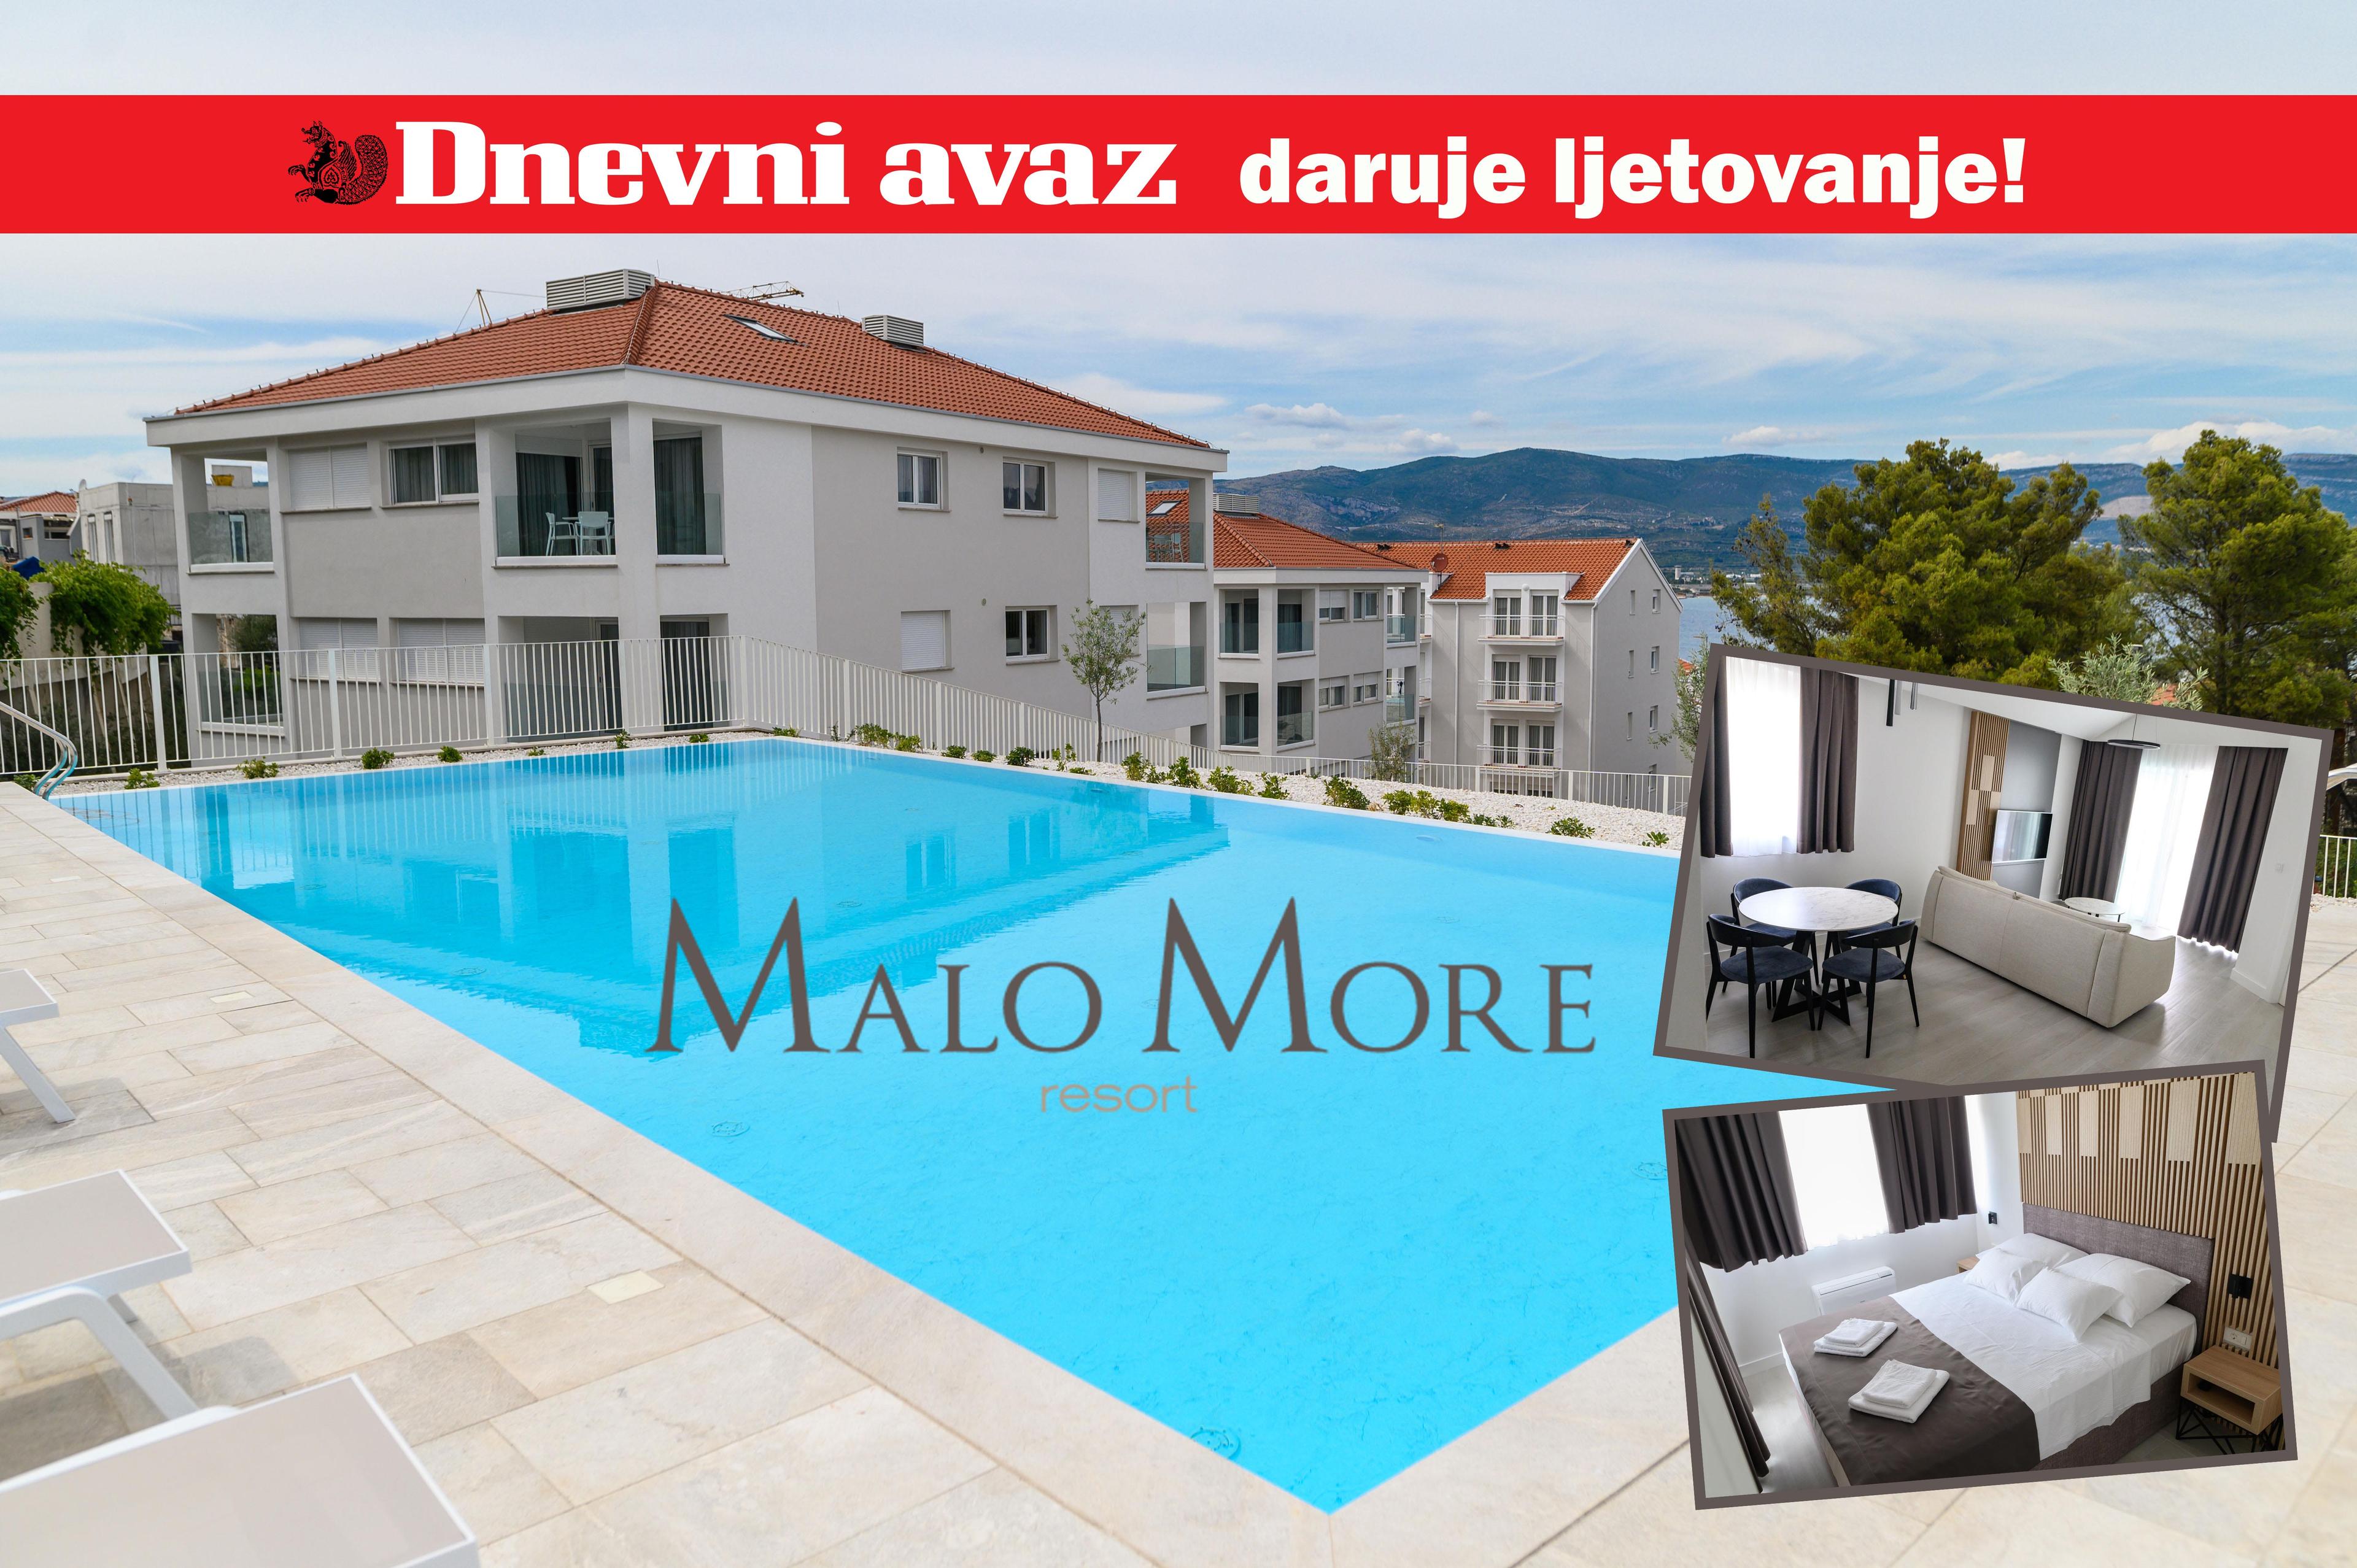 "Dnevni avaz" i resort "Malo More" vam poklanjaju ljetovanje za dvoje - Avaz